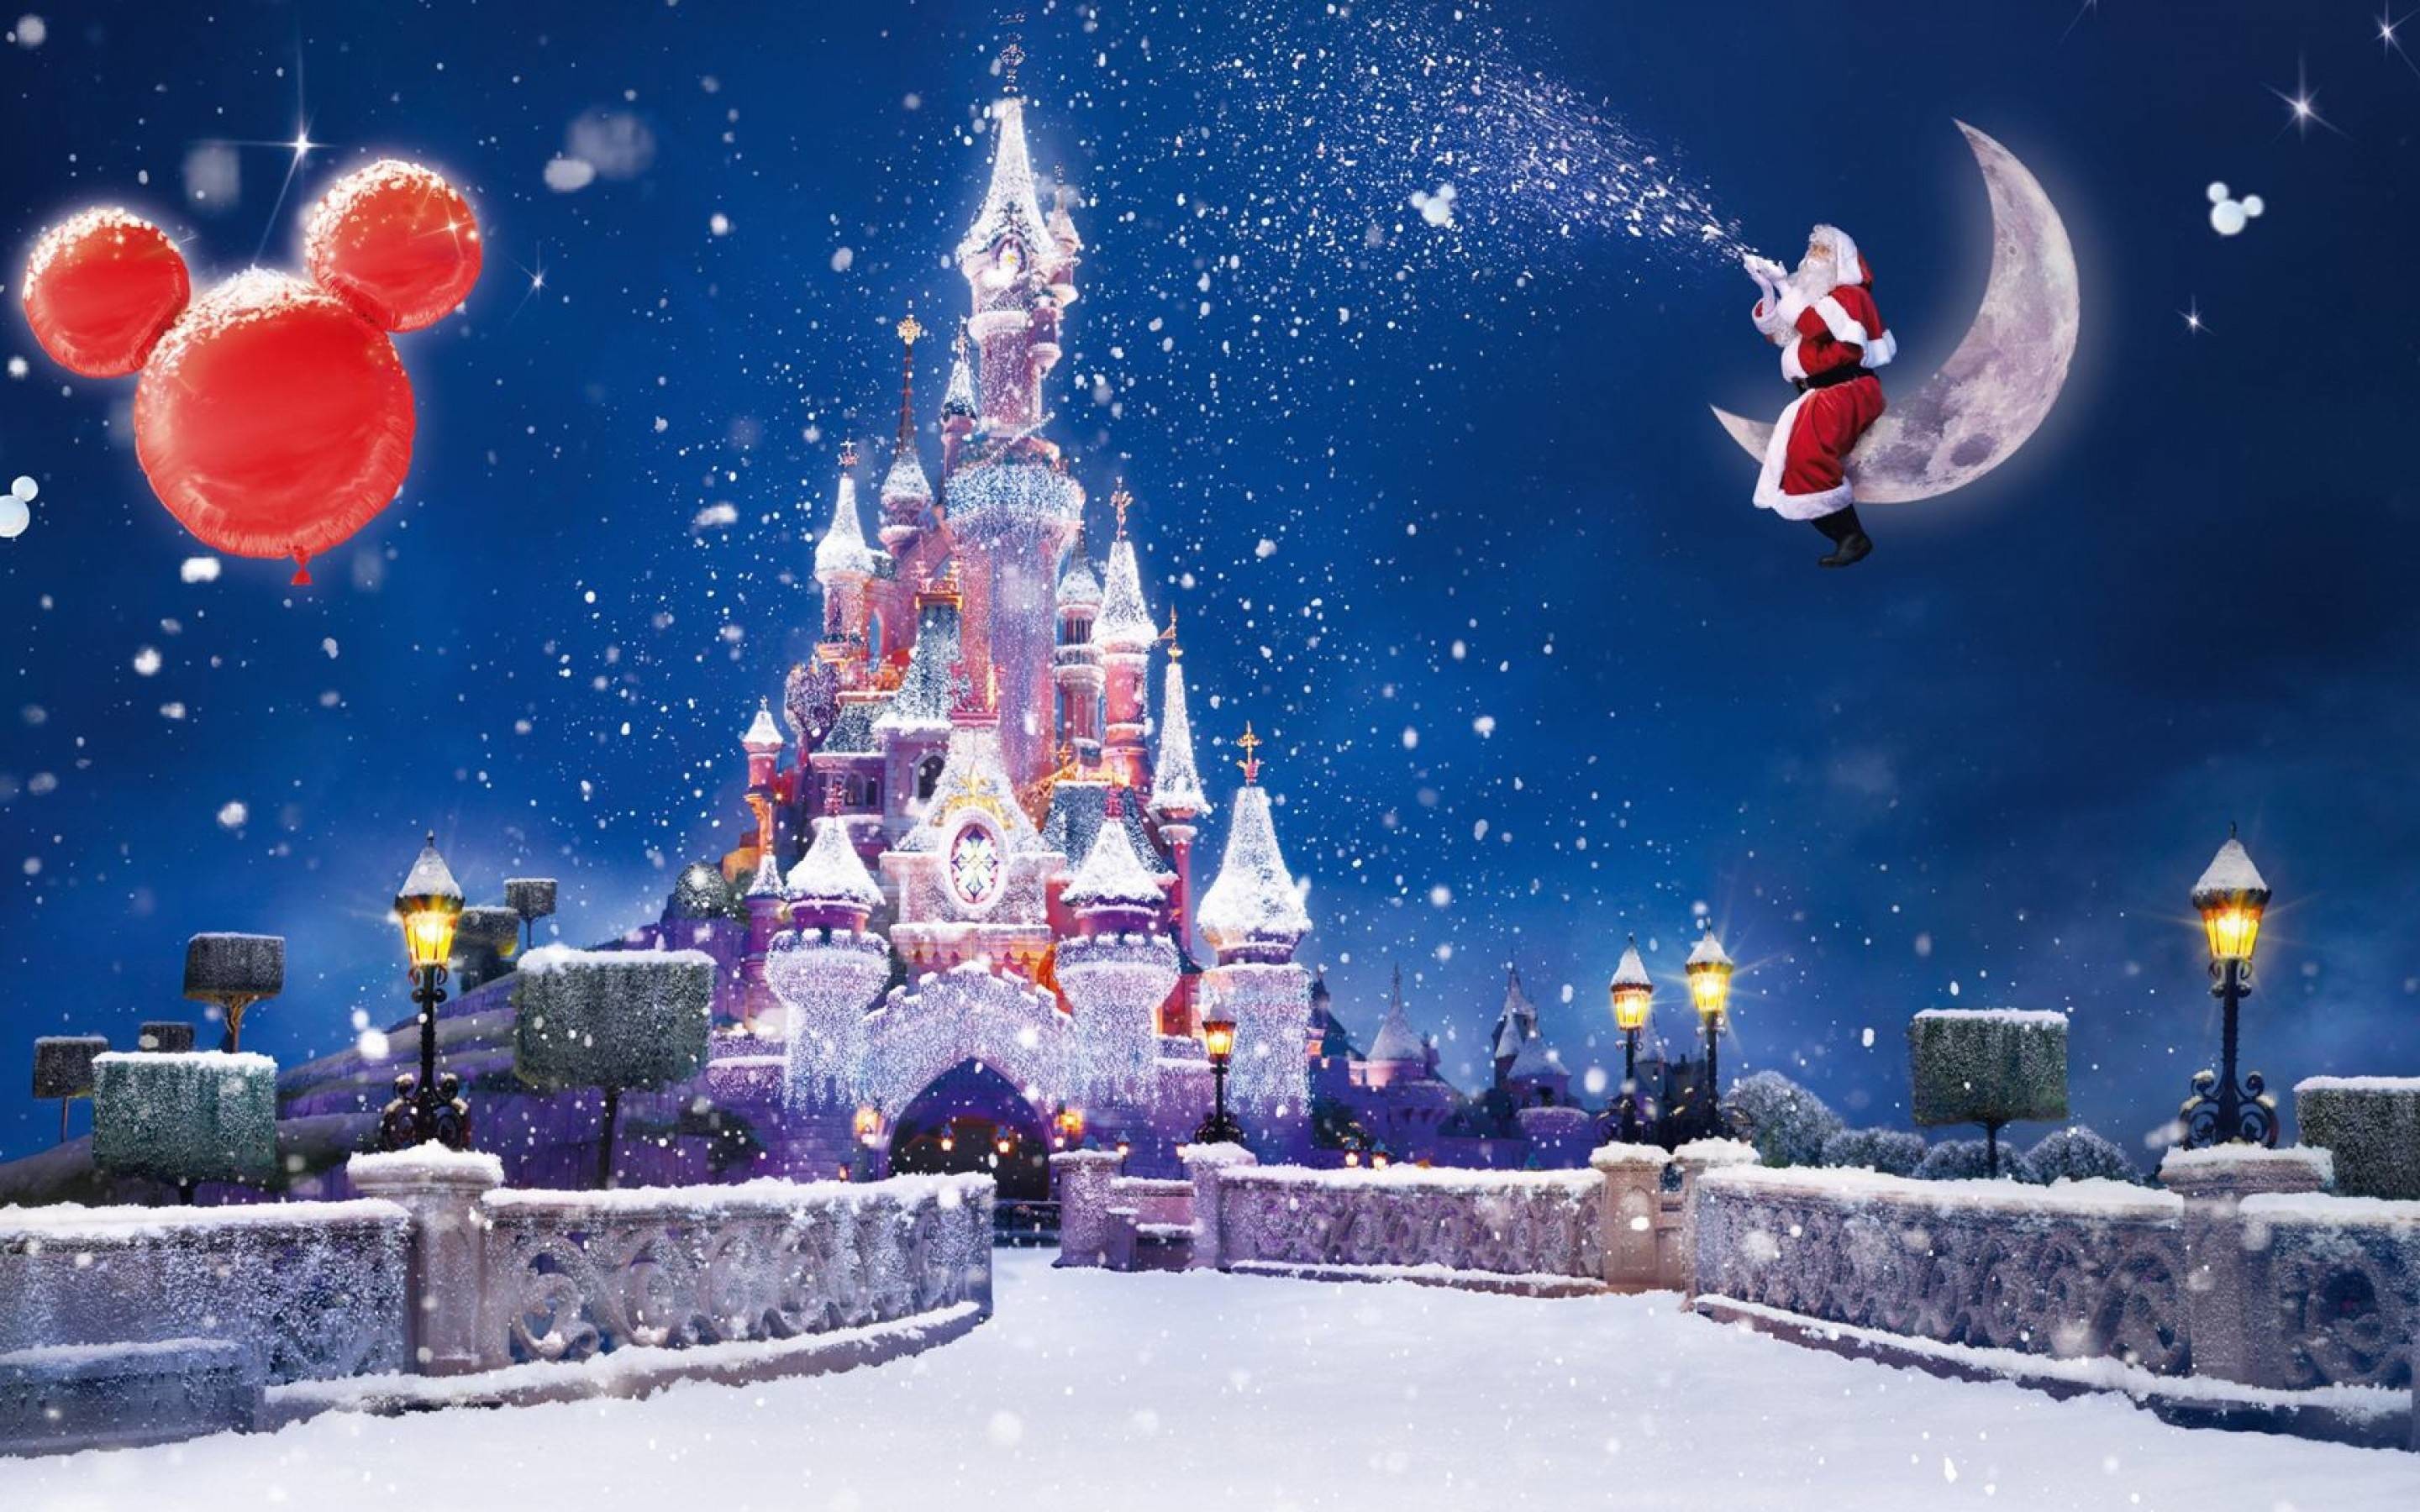 Disney Christmas Wallpapers – Full HD wallpaper search